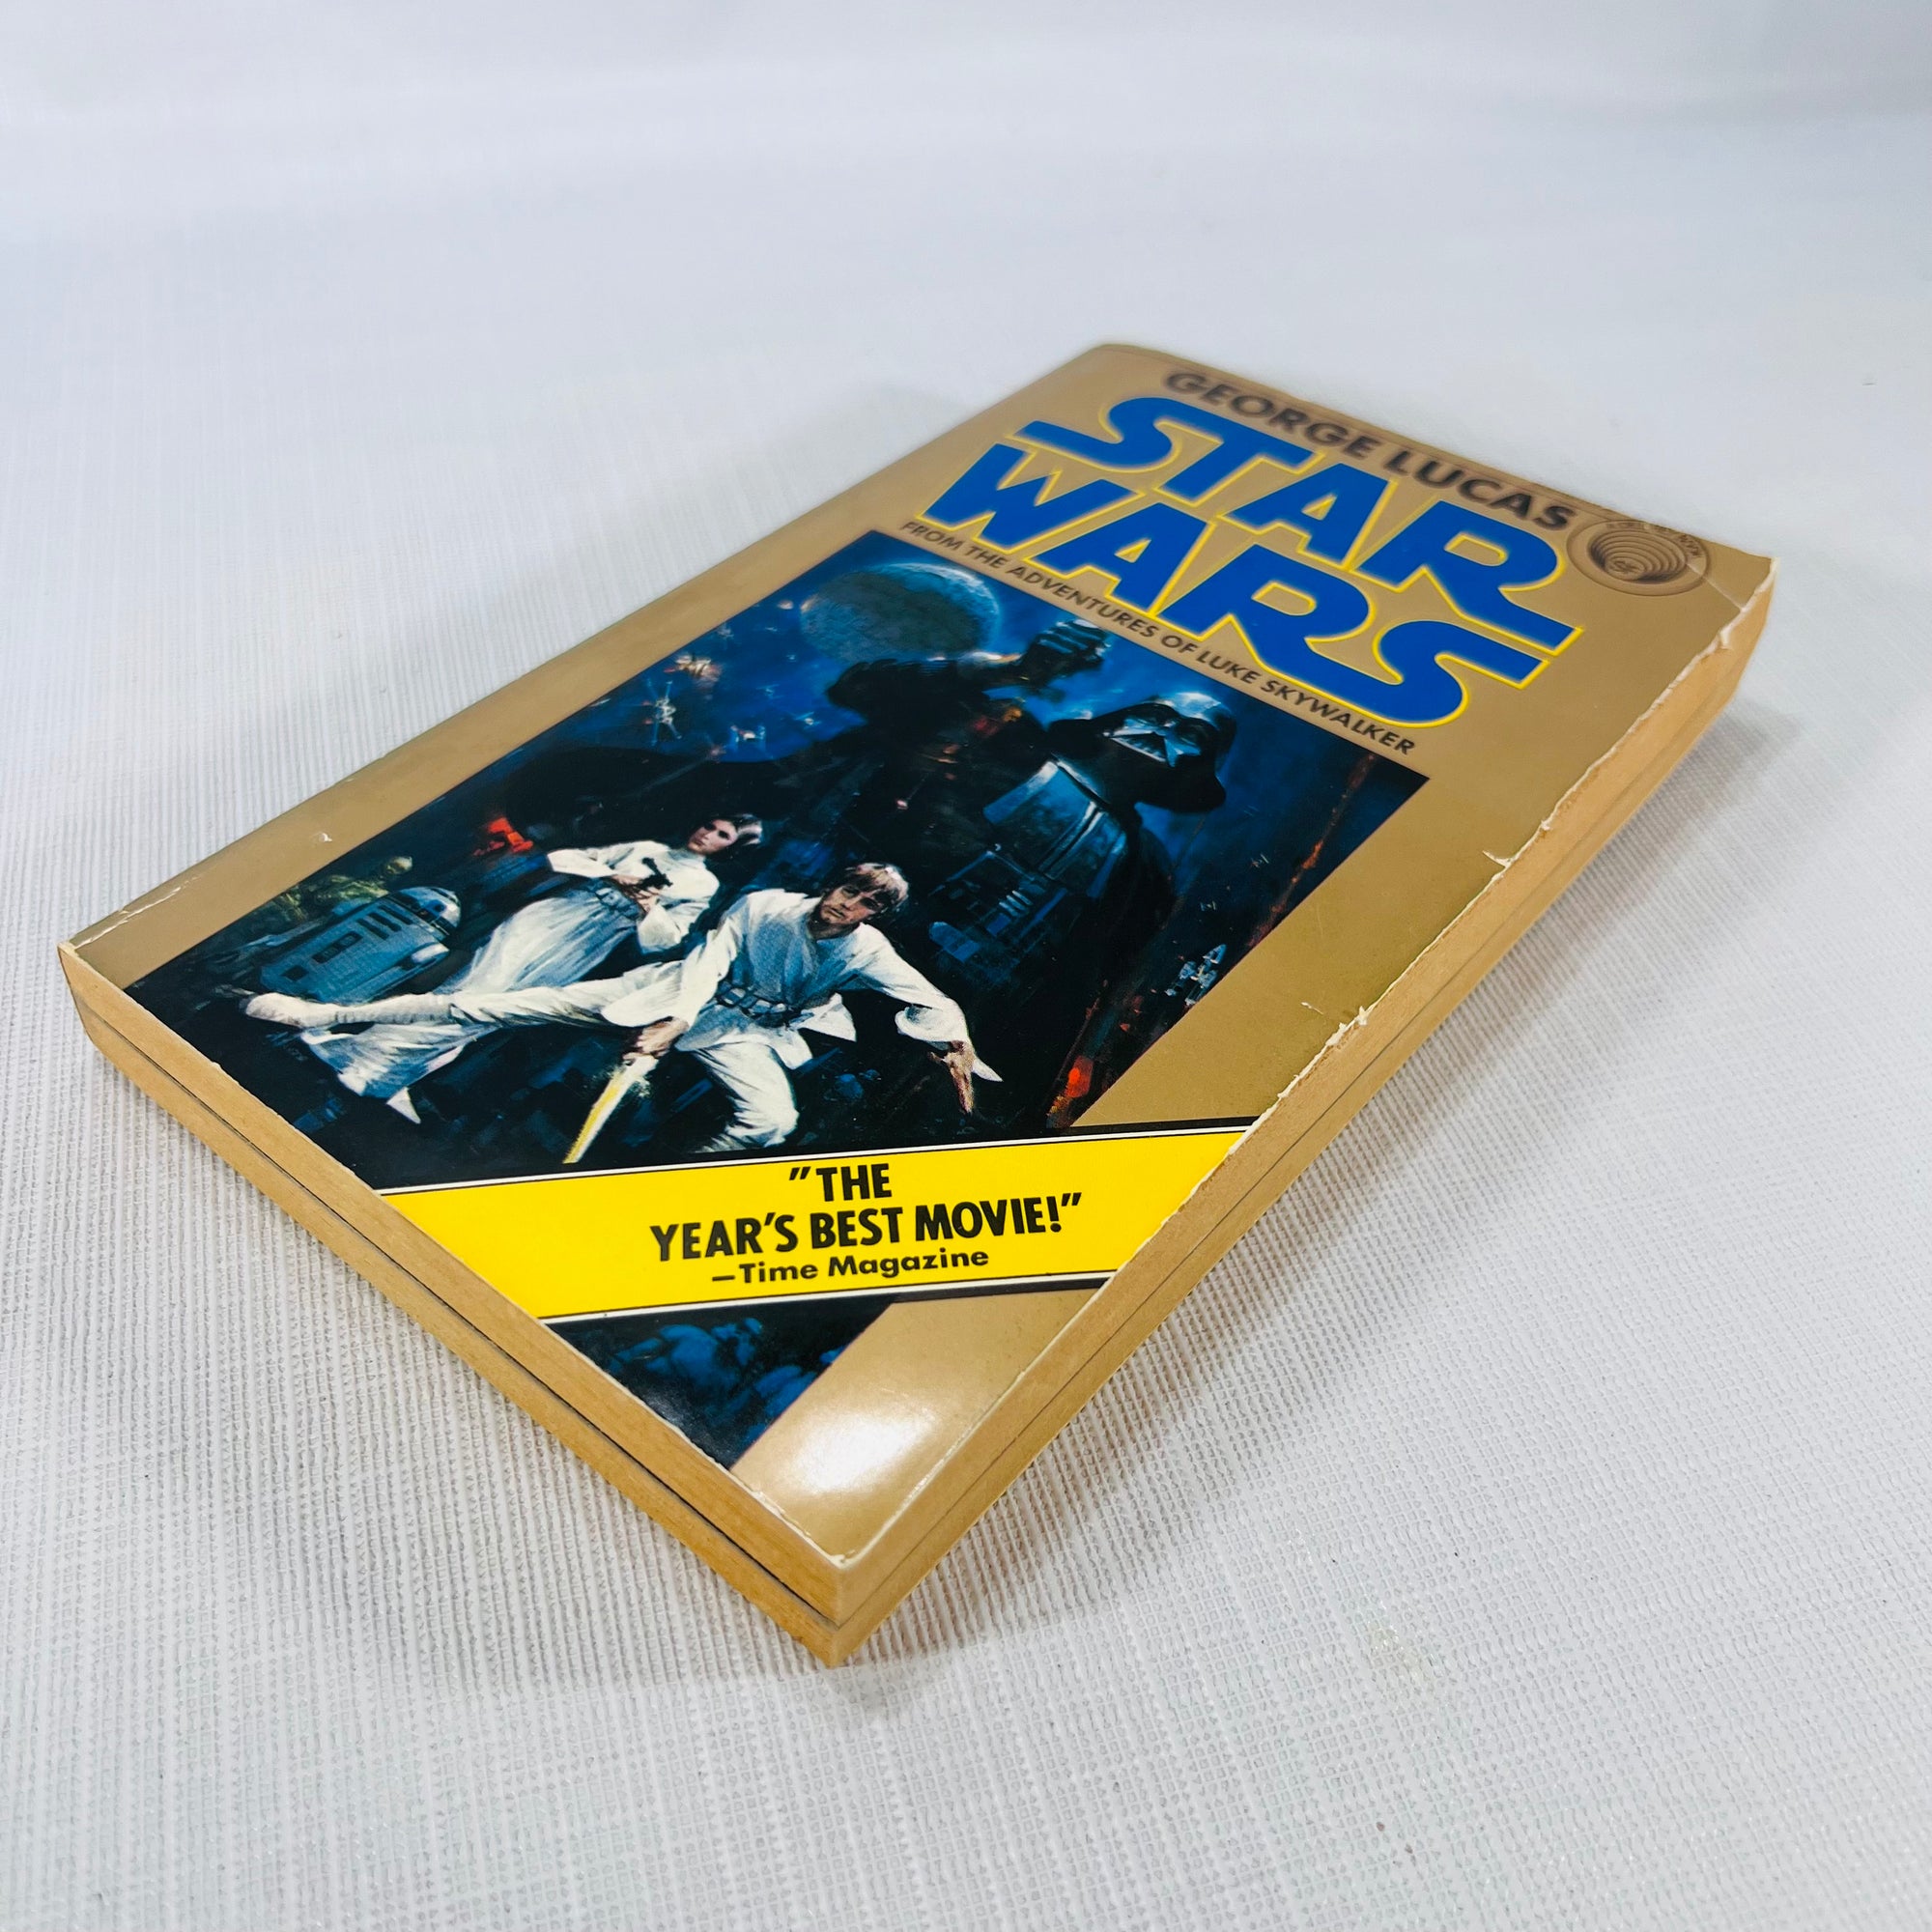 Star Wars from the adventures of Luke Skywalker by George Lucas 1976 Ballantine Books Paperback